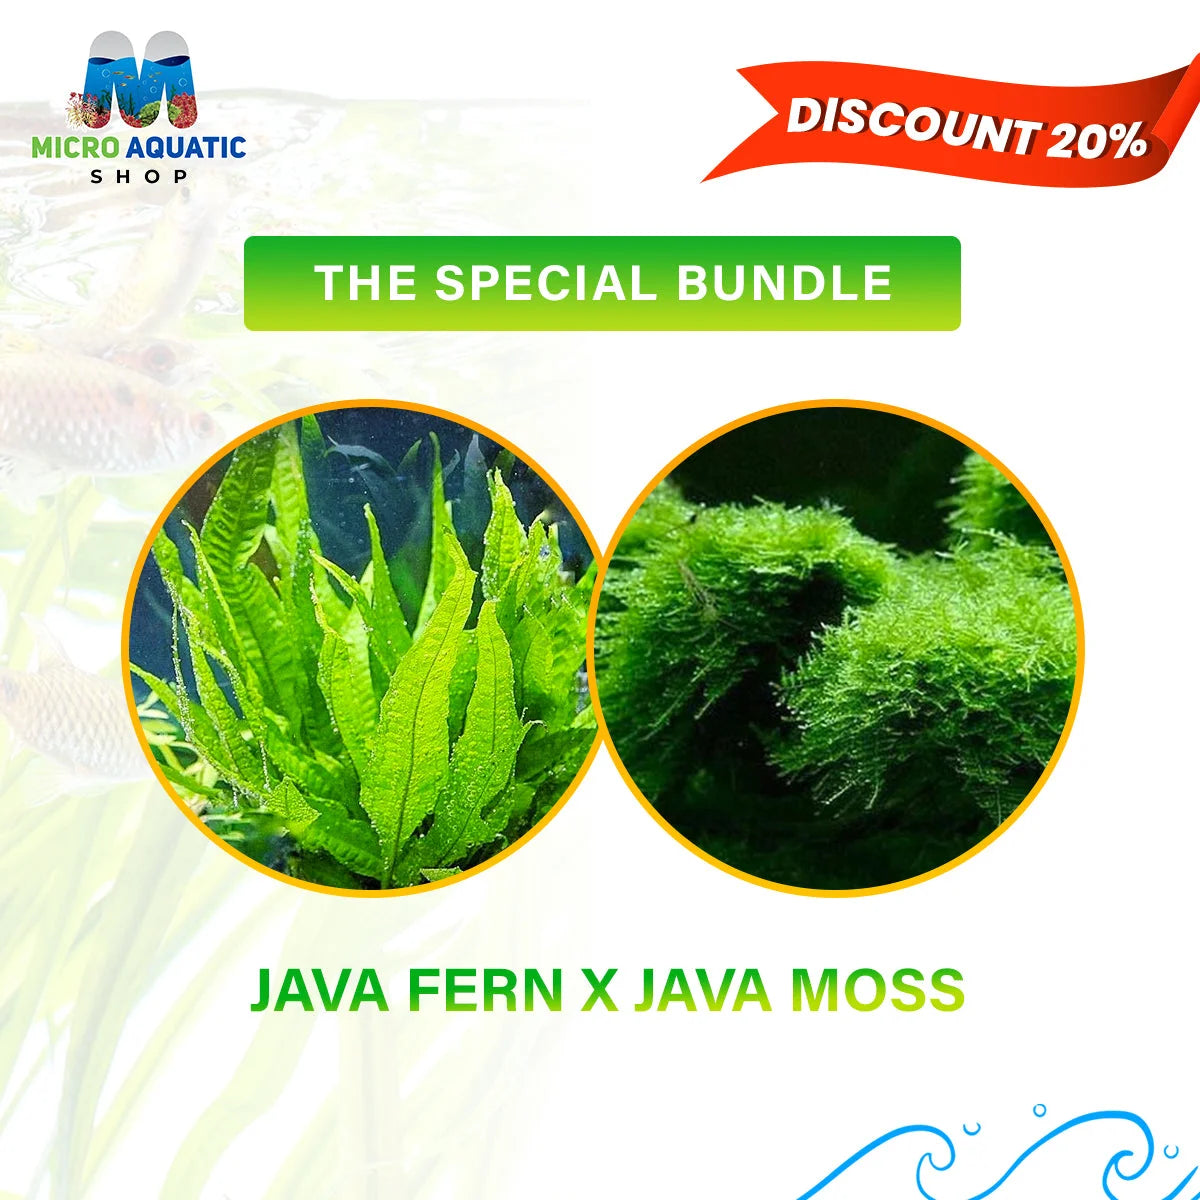 Java Fern x Java Moss: The Special Bundle